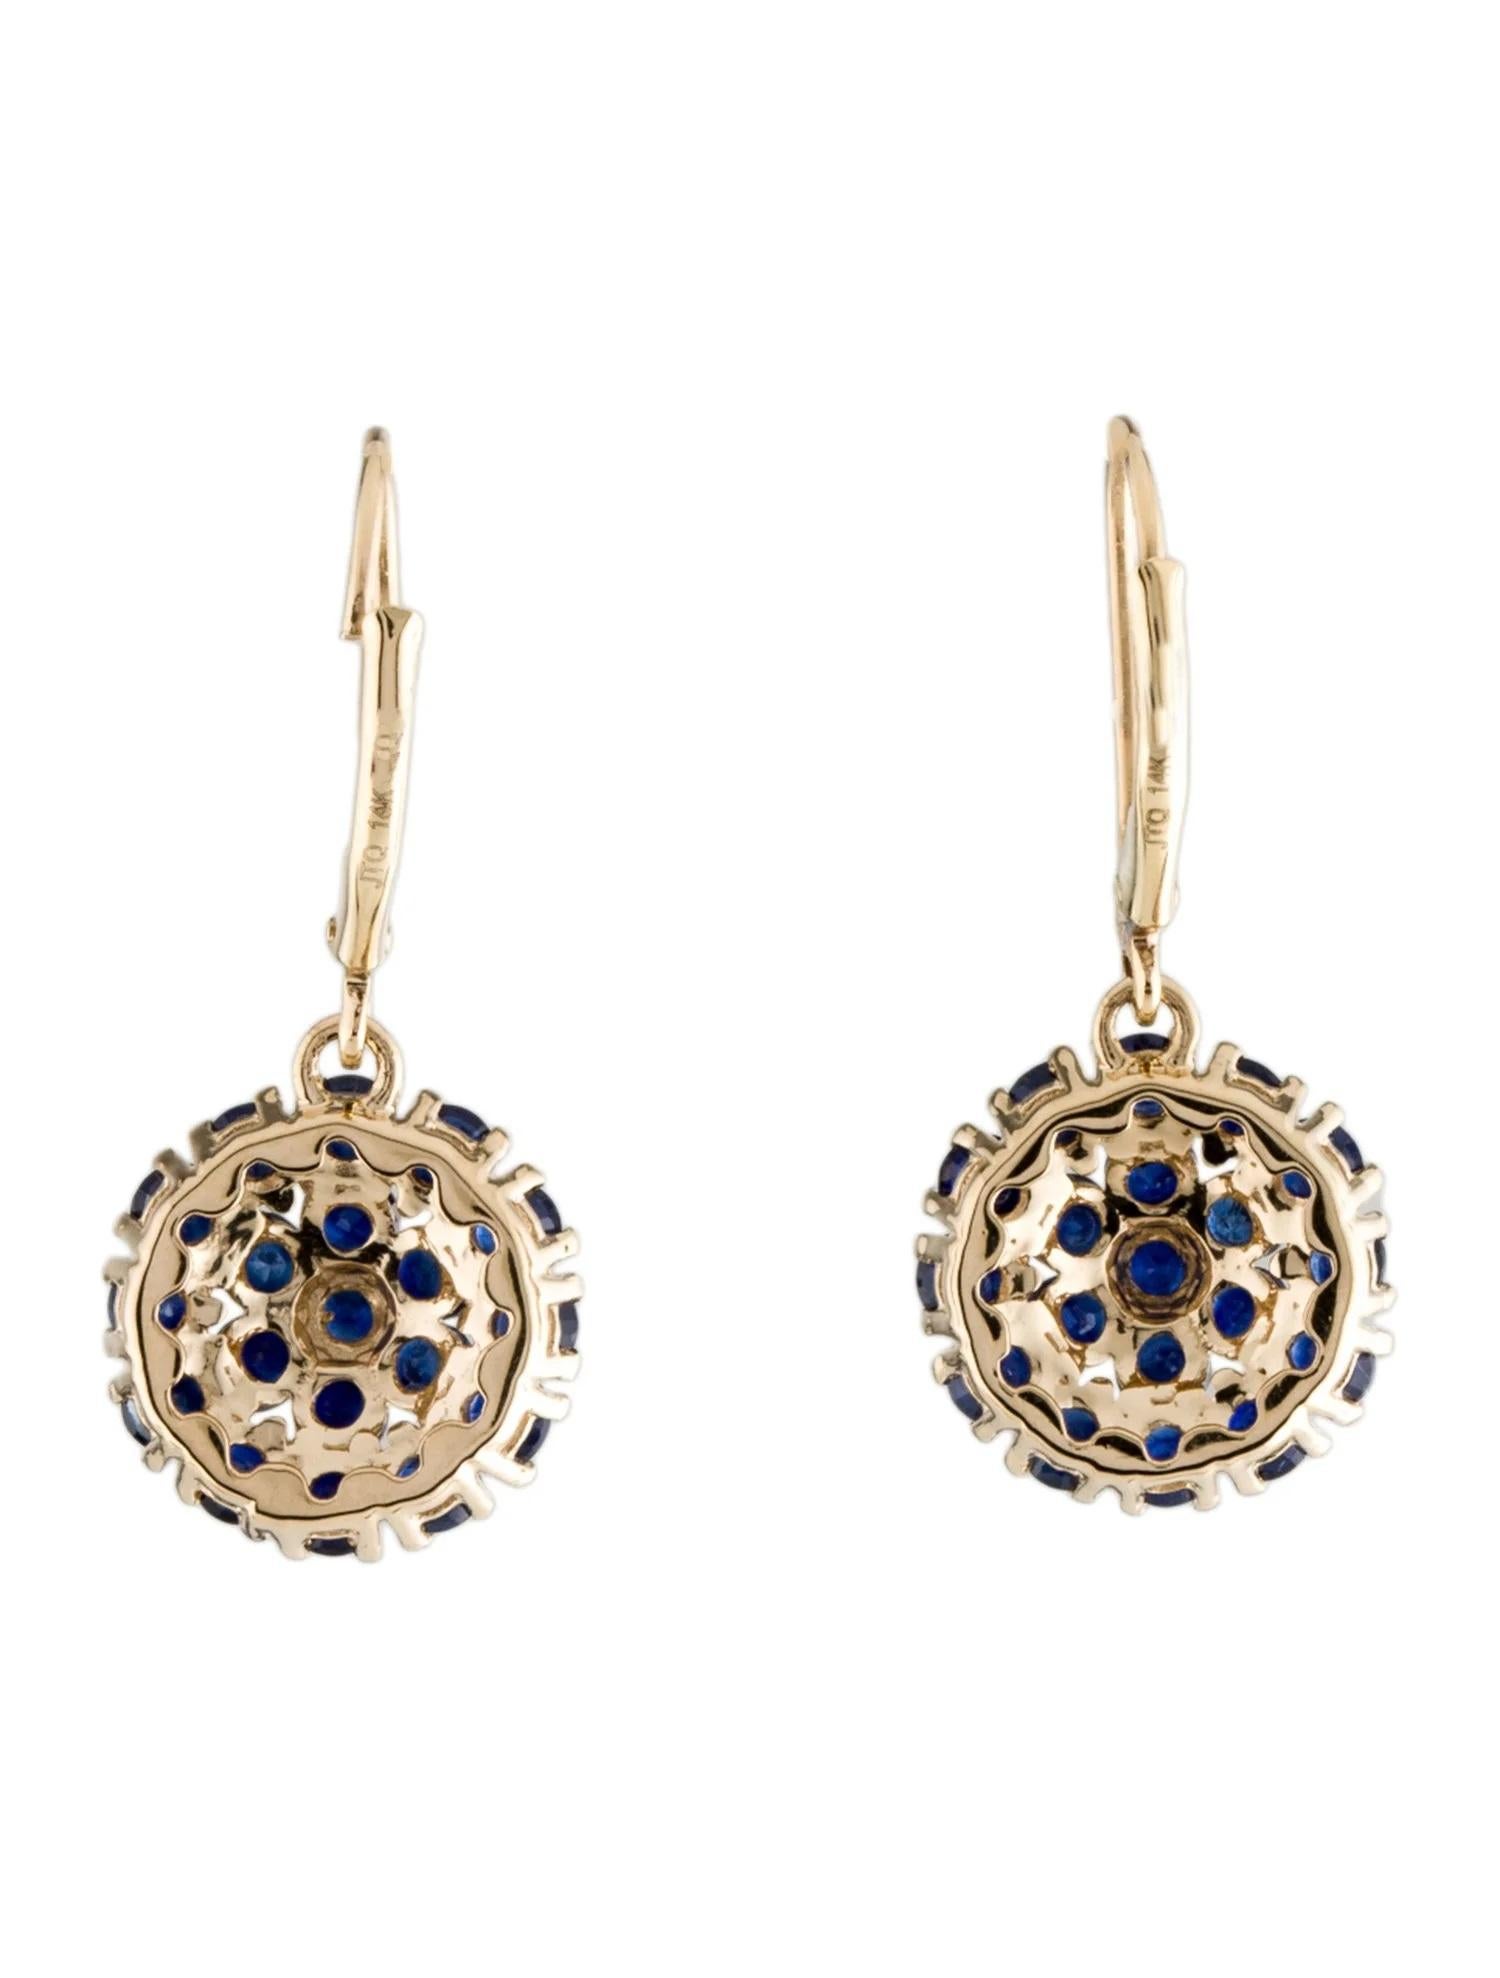 Artist 14K Sapphire Drop Earrings  3.86 Carat Round Faceted Gemstones  Maker's Mark For Sale